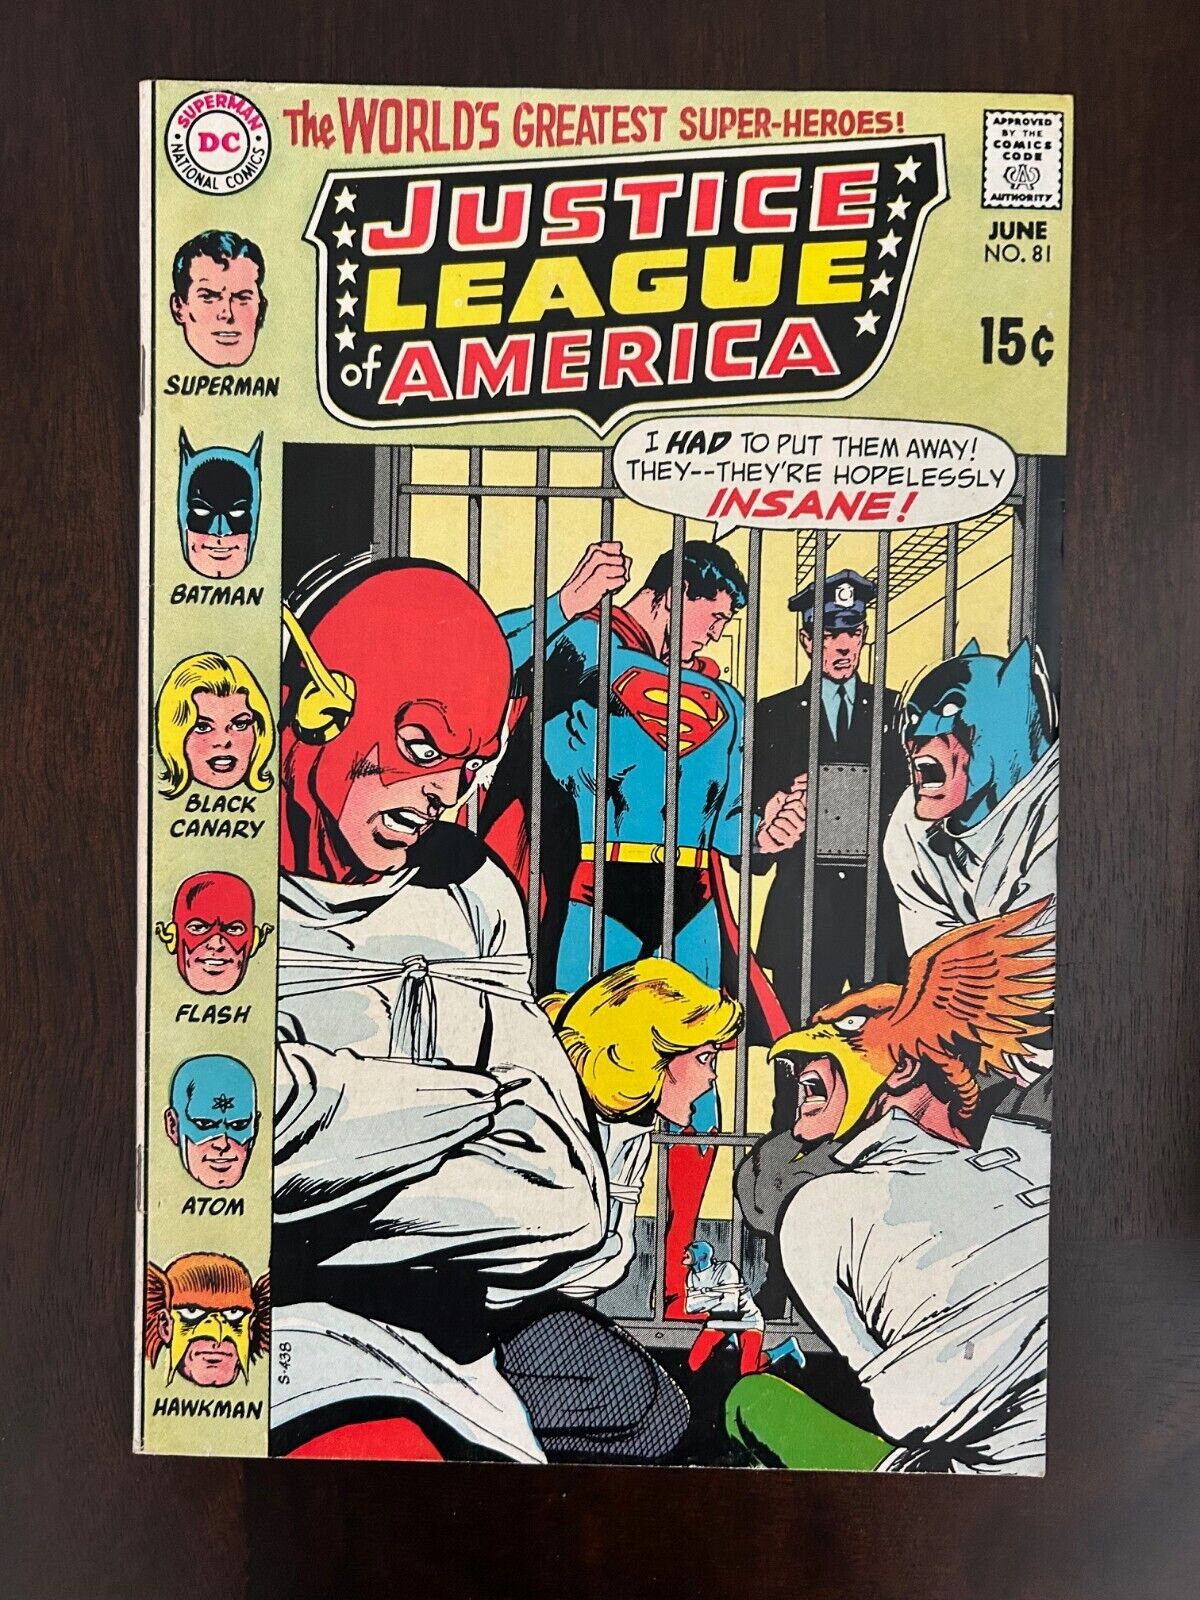 Justice League of America #81  (NM-)  Neal Adams cover - Beautiful Book